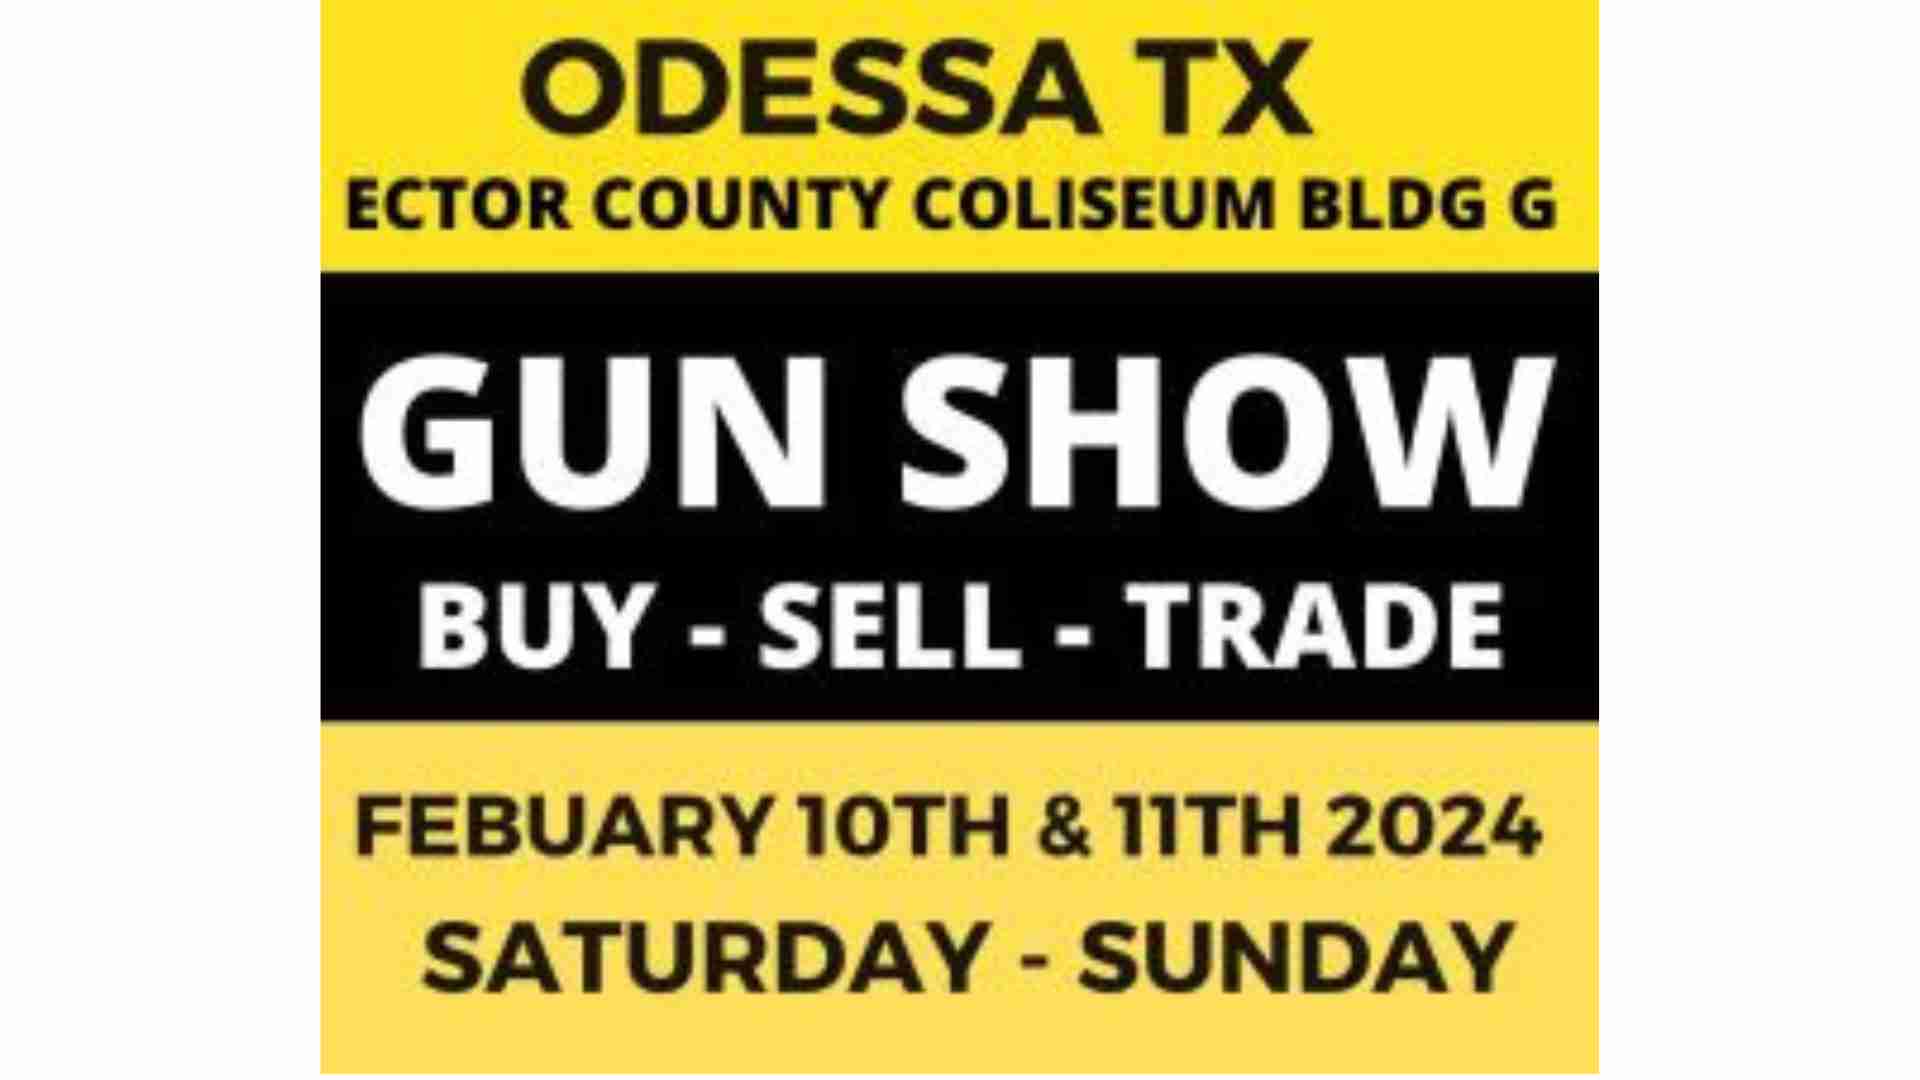 WEST TEXAS GUN SHOW at The Ector County Coliseum